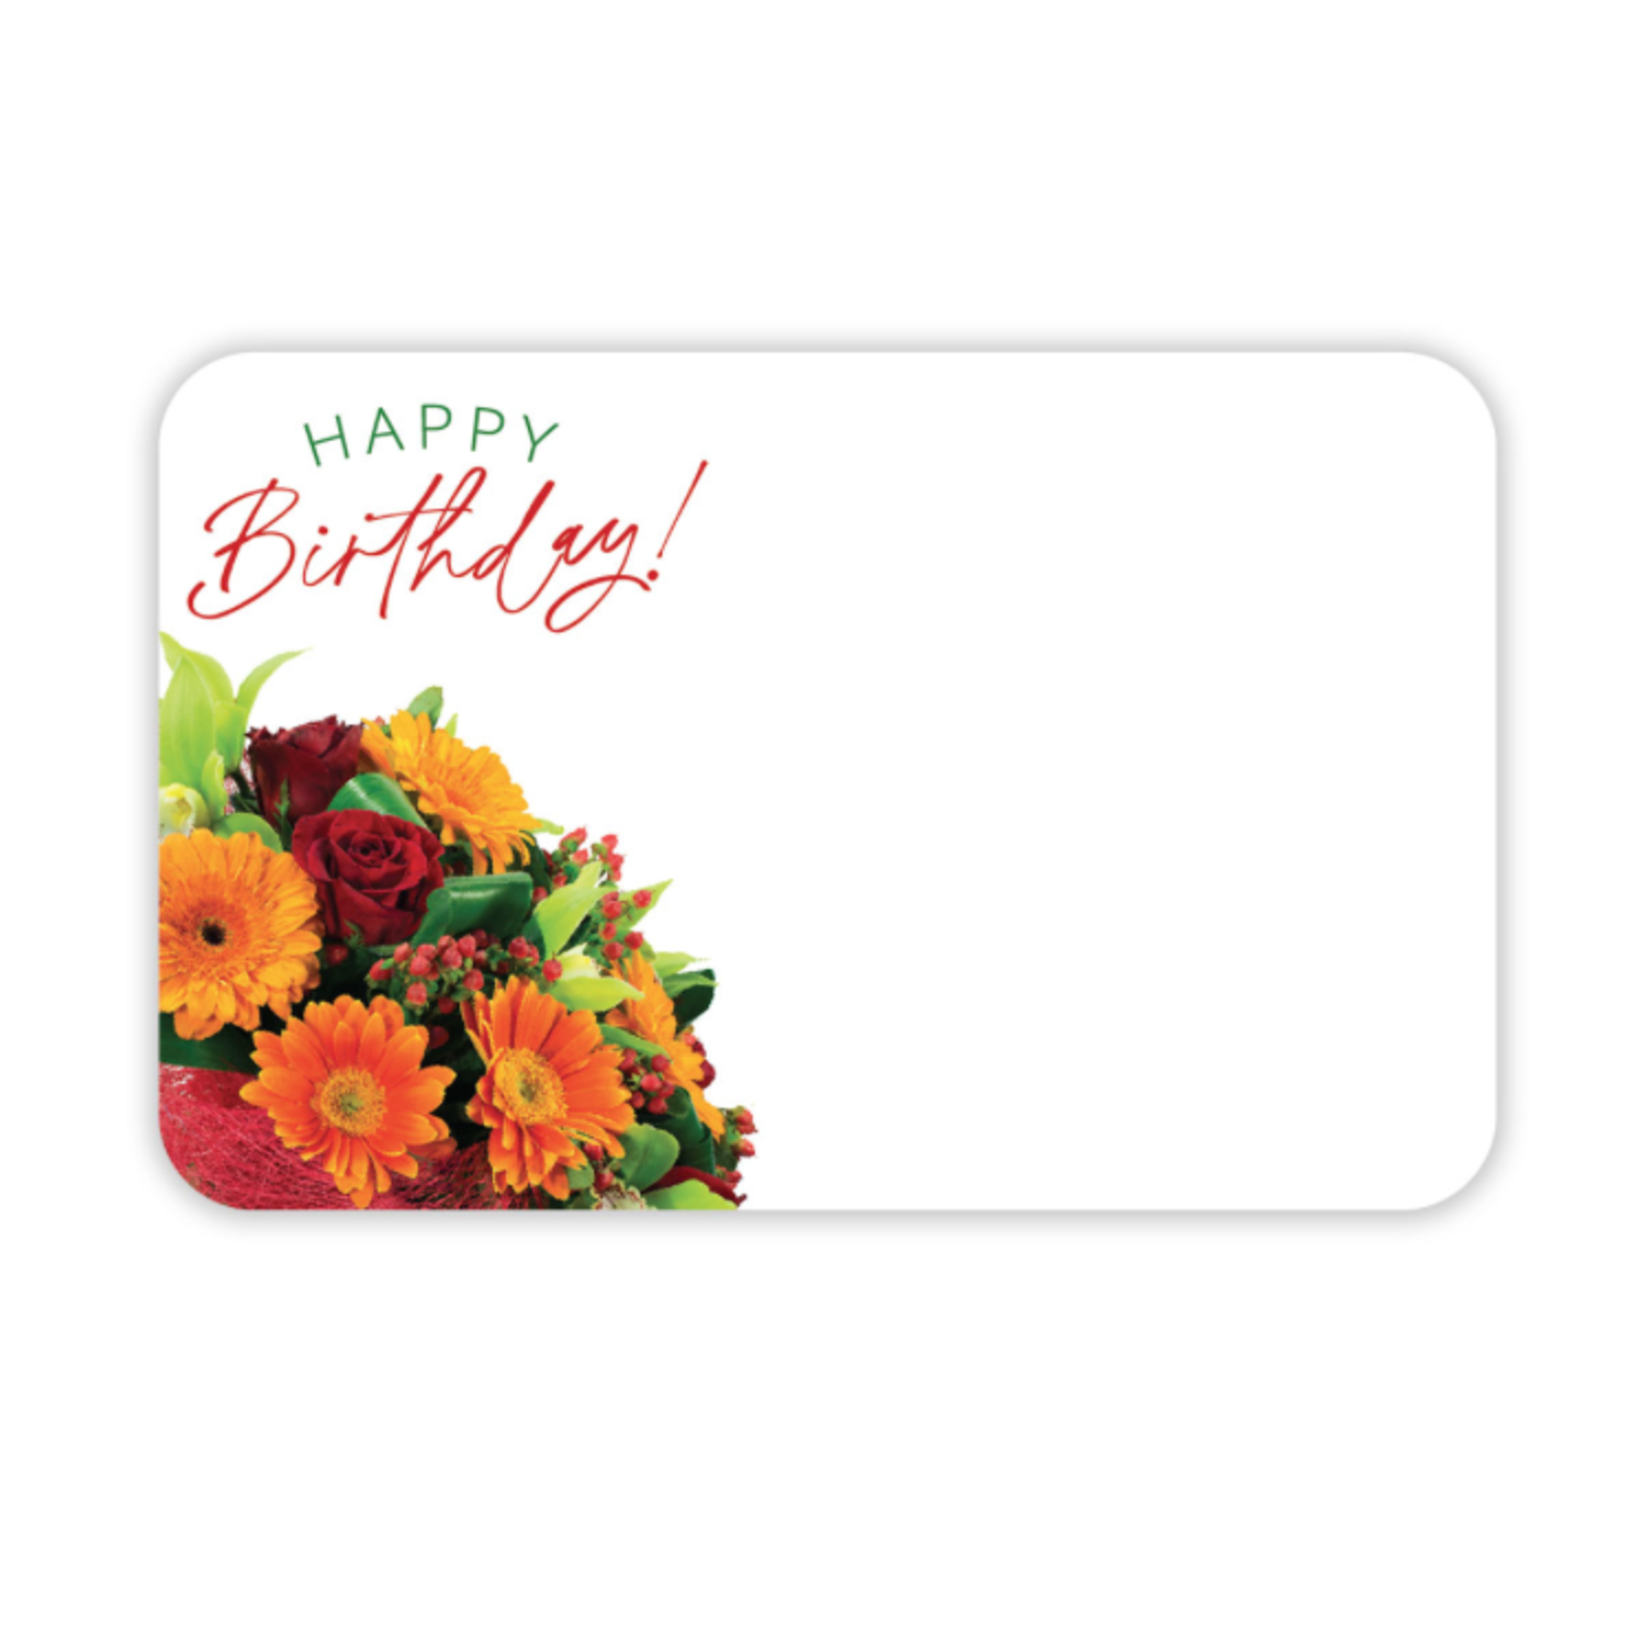 "HAPPY BIRTHDAY" CAPRI CARD